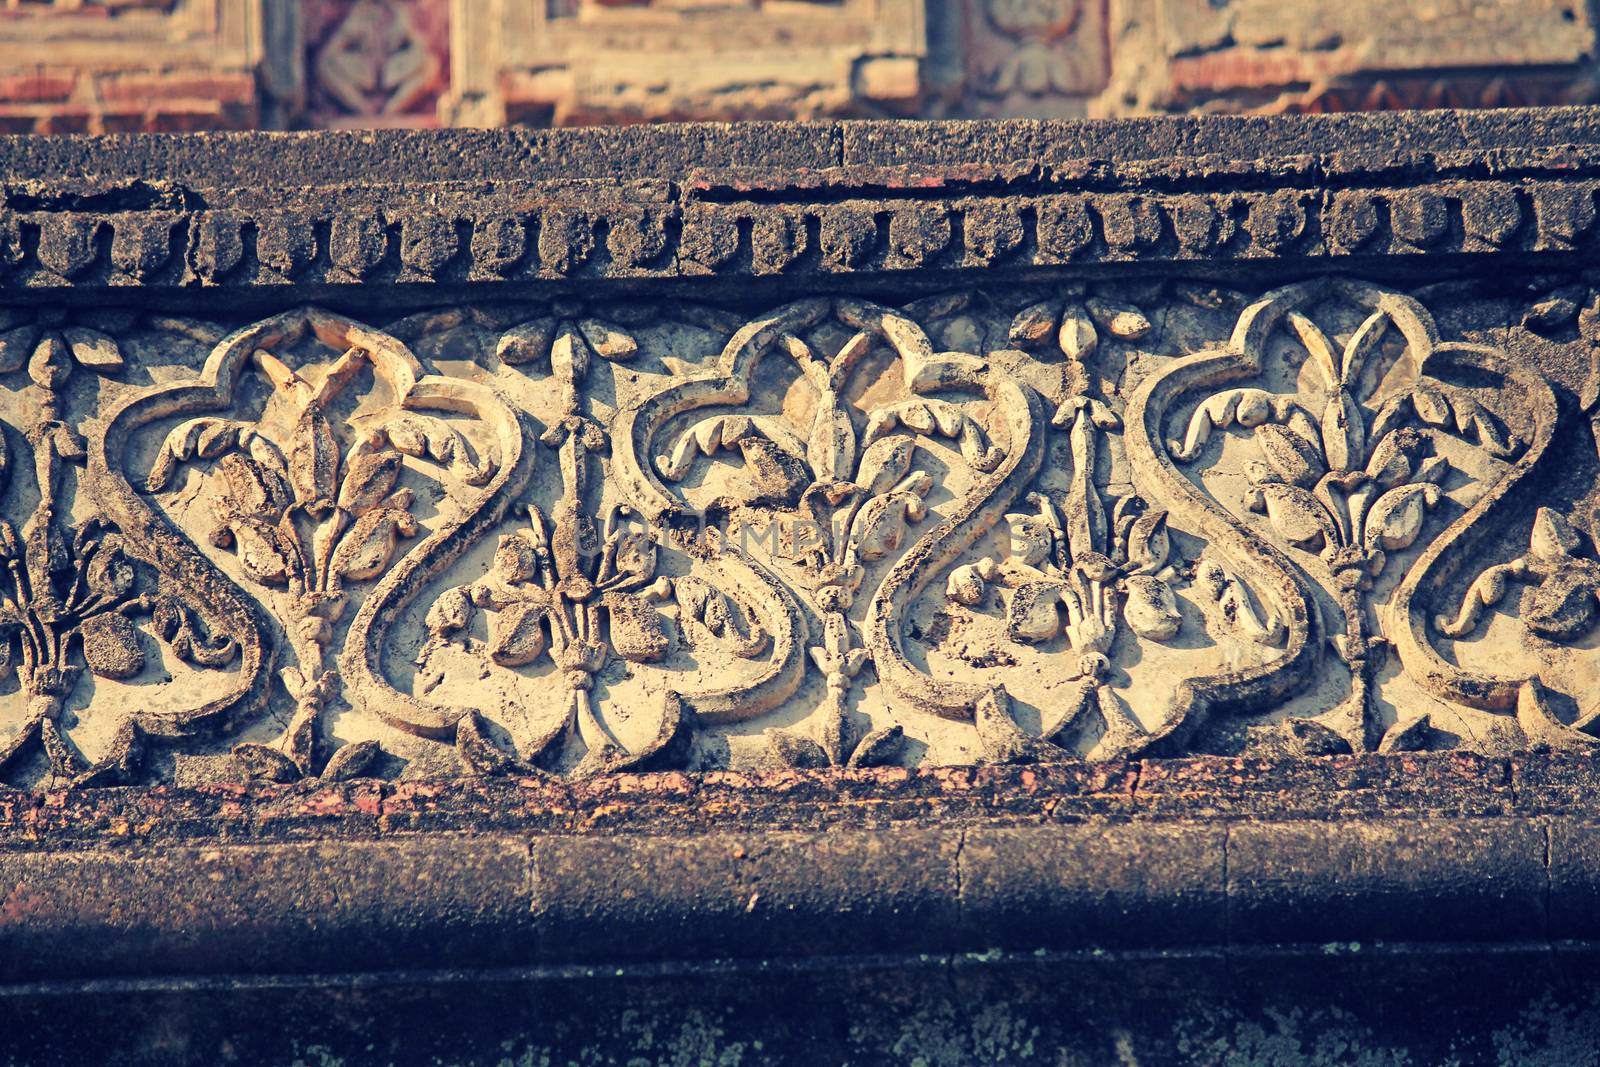 Floral Stone carving at Sangameshwar Temple near Saswad, Maharashtra, India